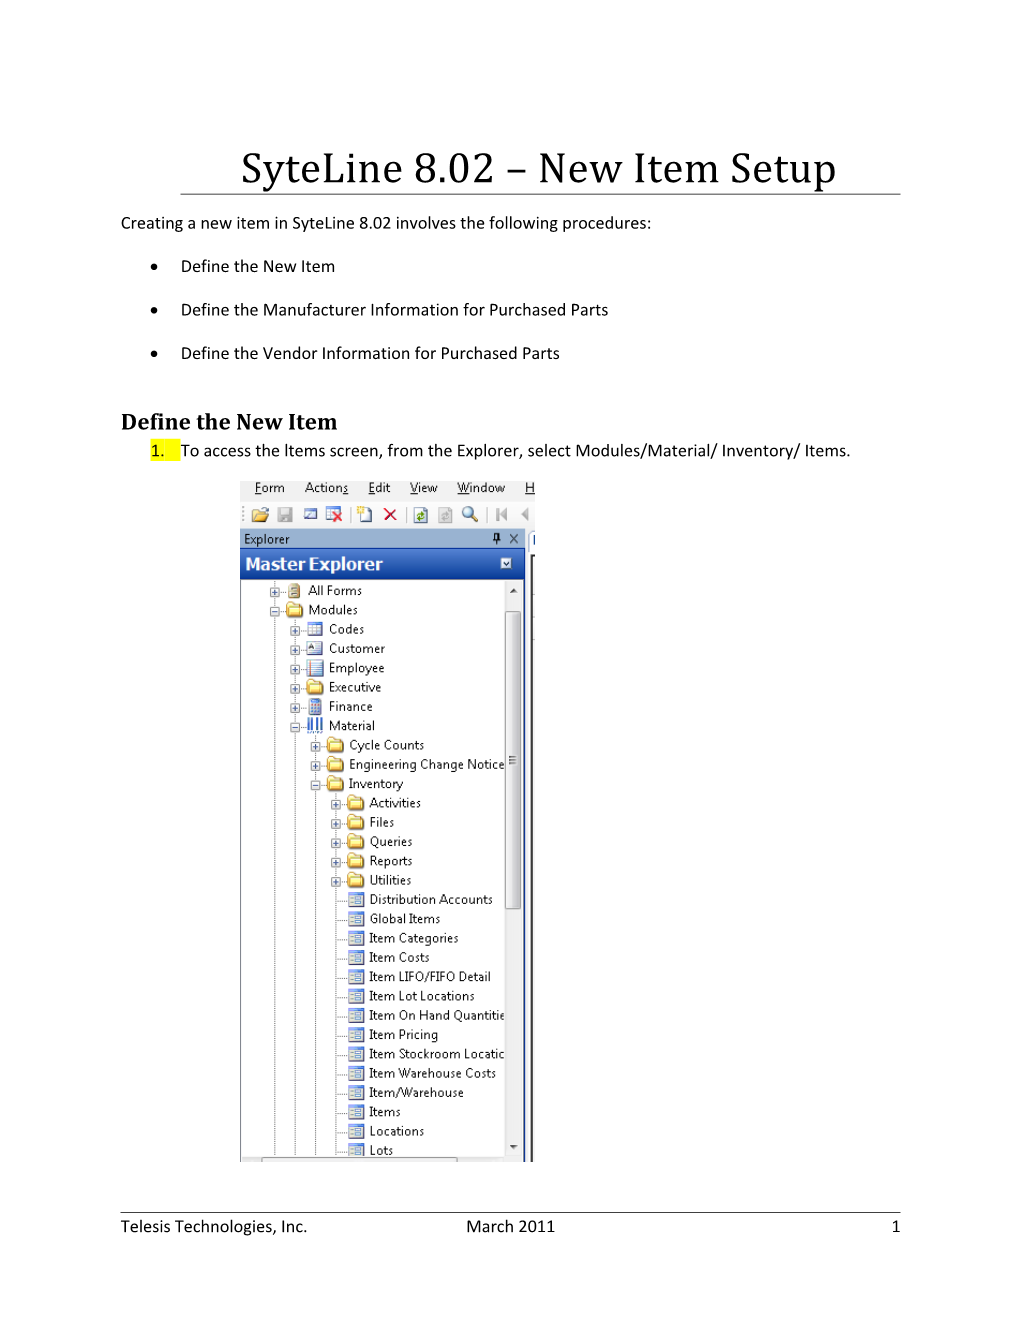 Syteline 8.02 - Item Setup Procedures